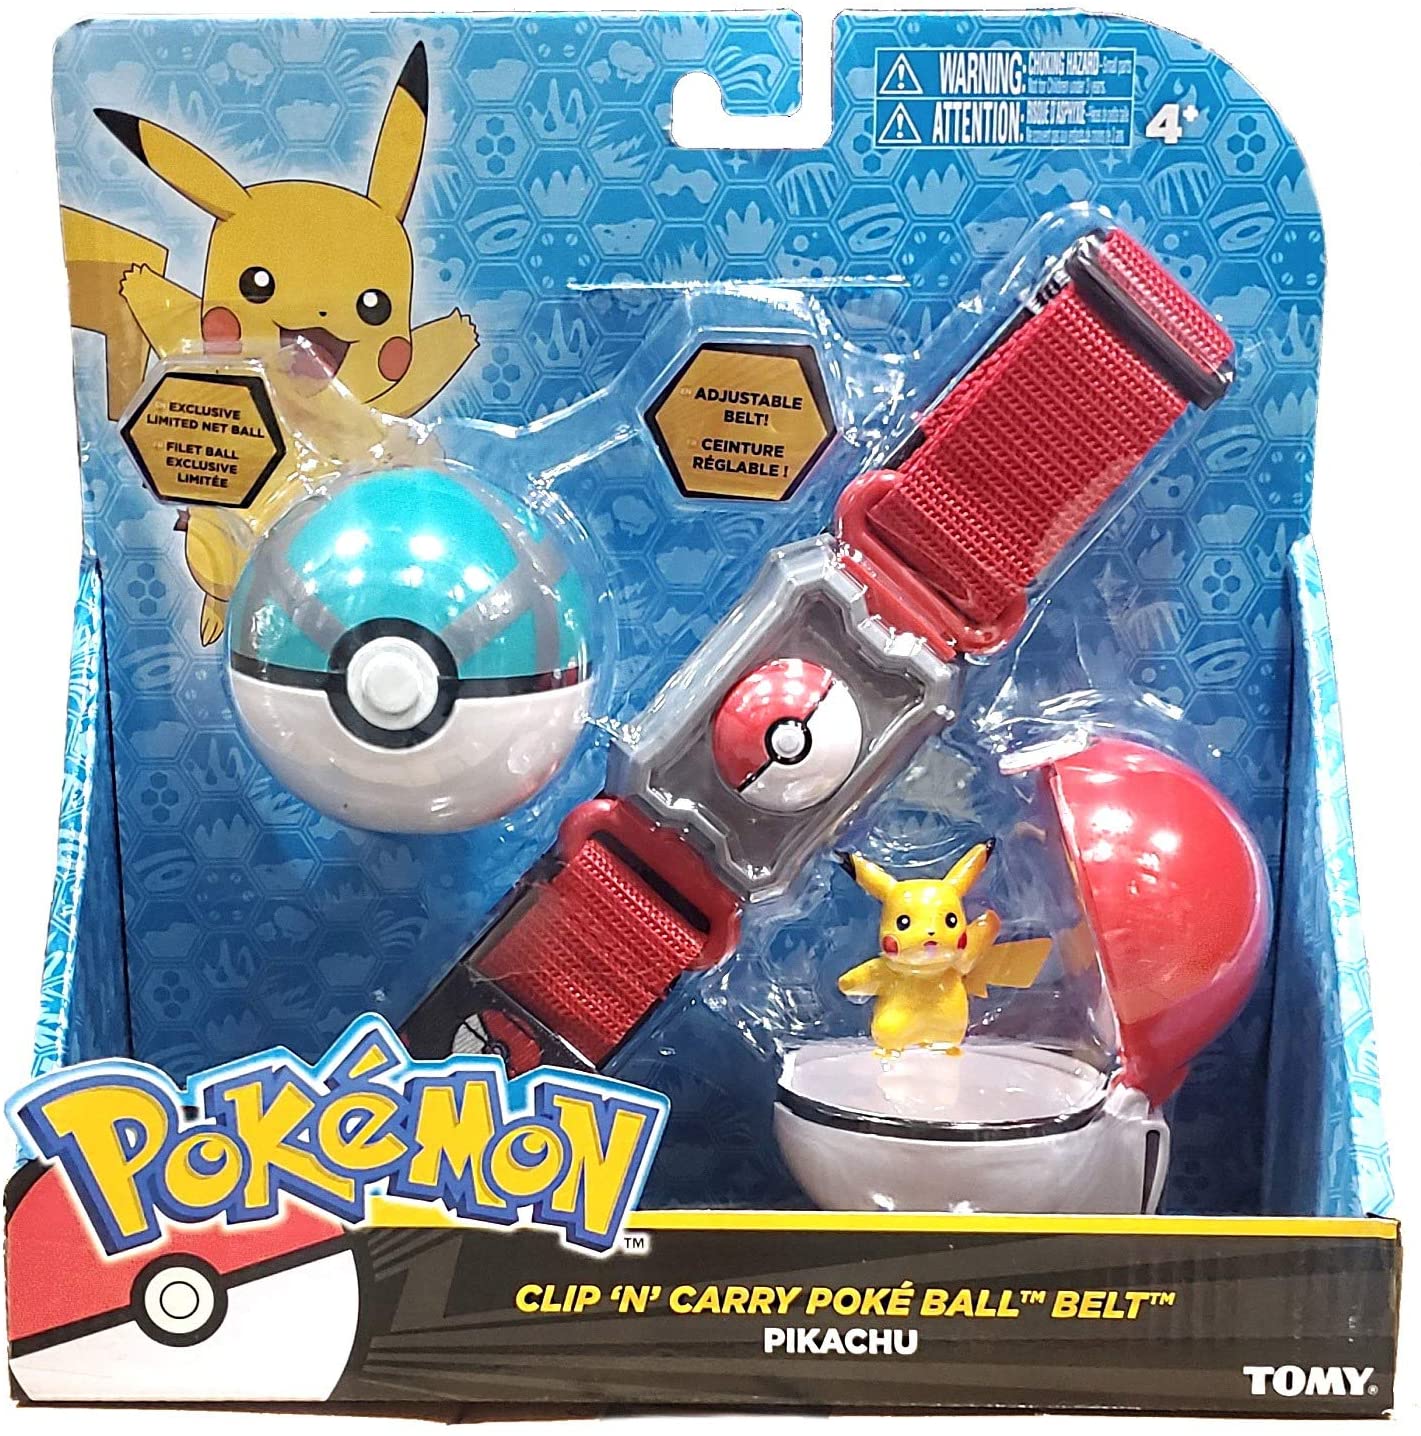 Comprar Pokemon figura vinil 10 cm Cubone de Bizak